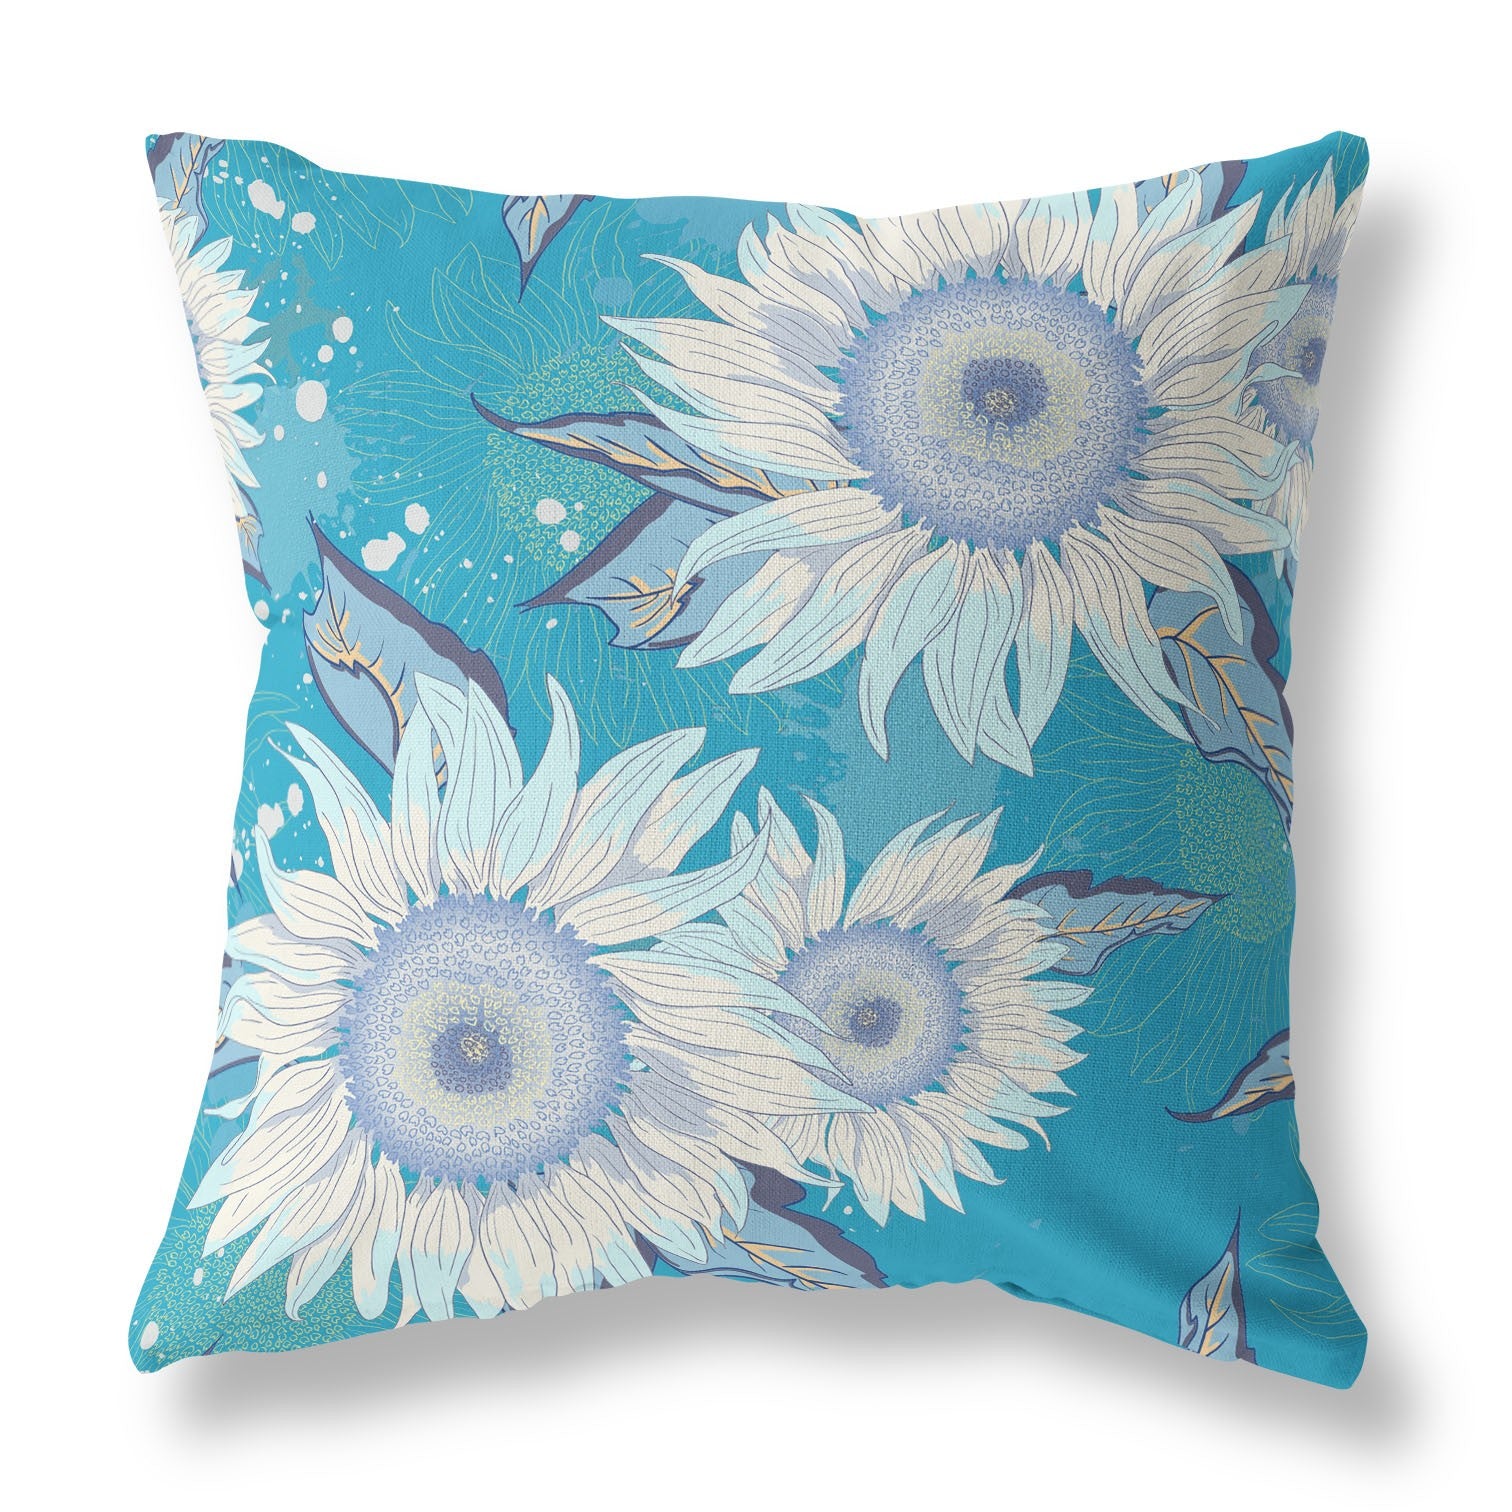 18" Aqua White Sunflower Indoor Outdoor Zippered Throw Pillow